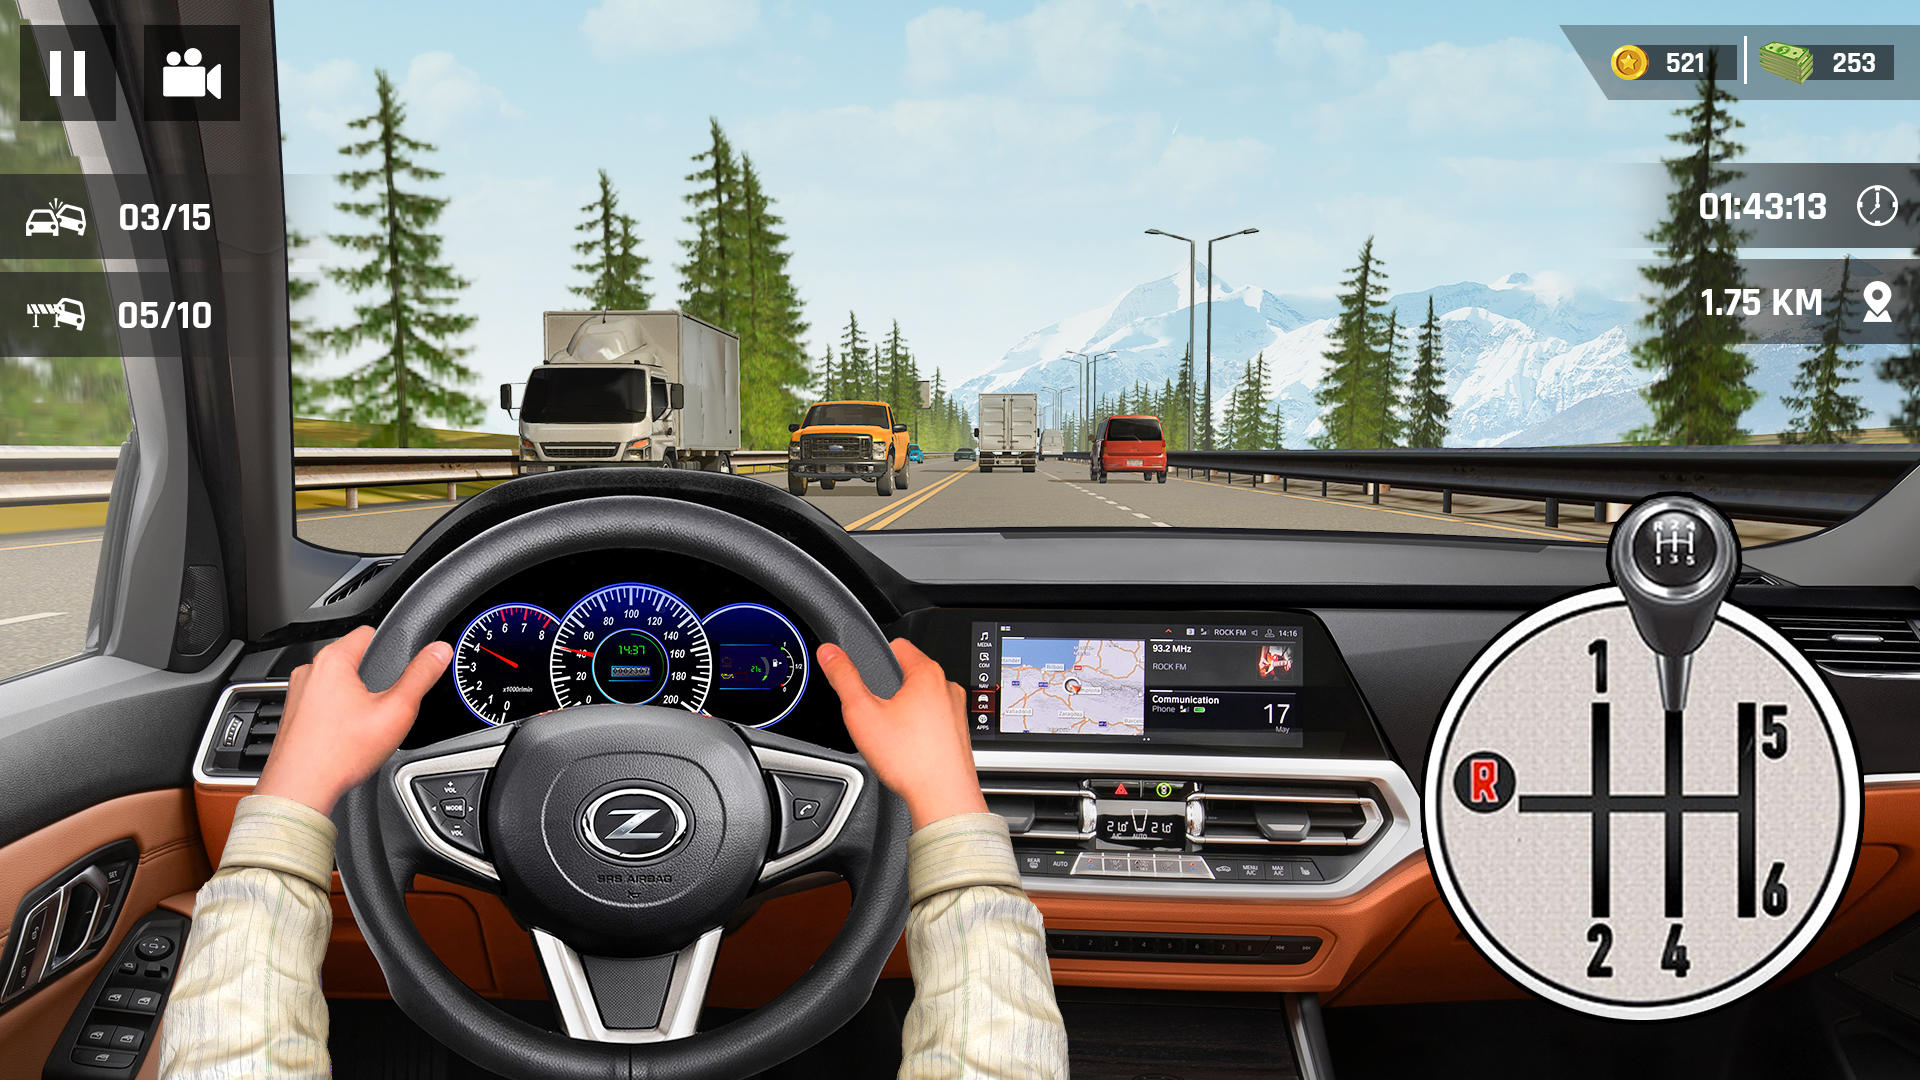 Download do APK de Speed Car Race 3D - Car Games para Android